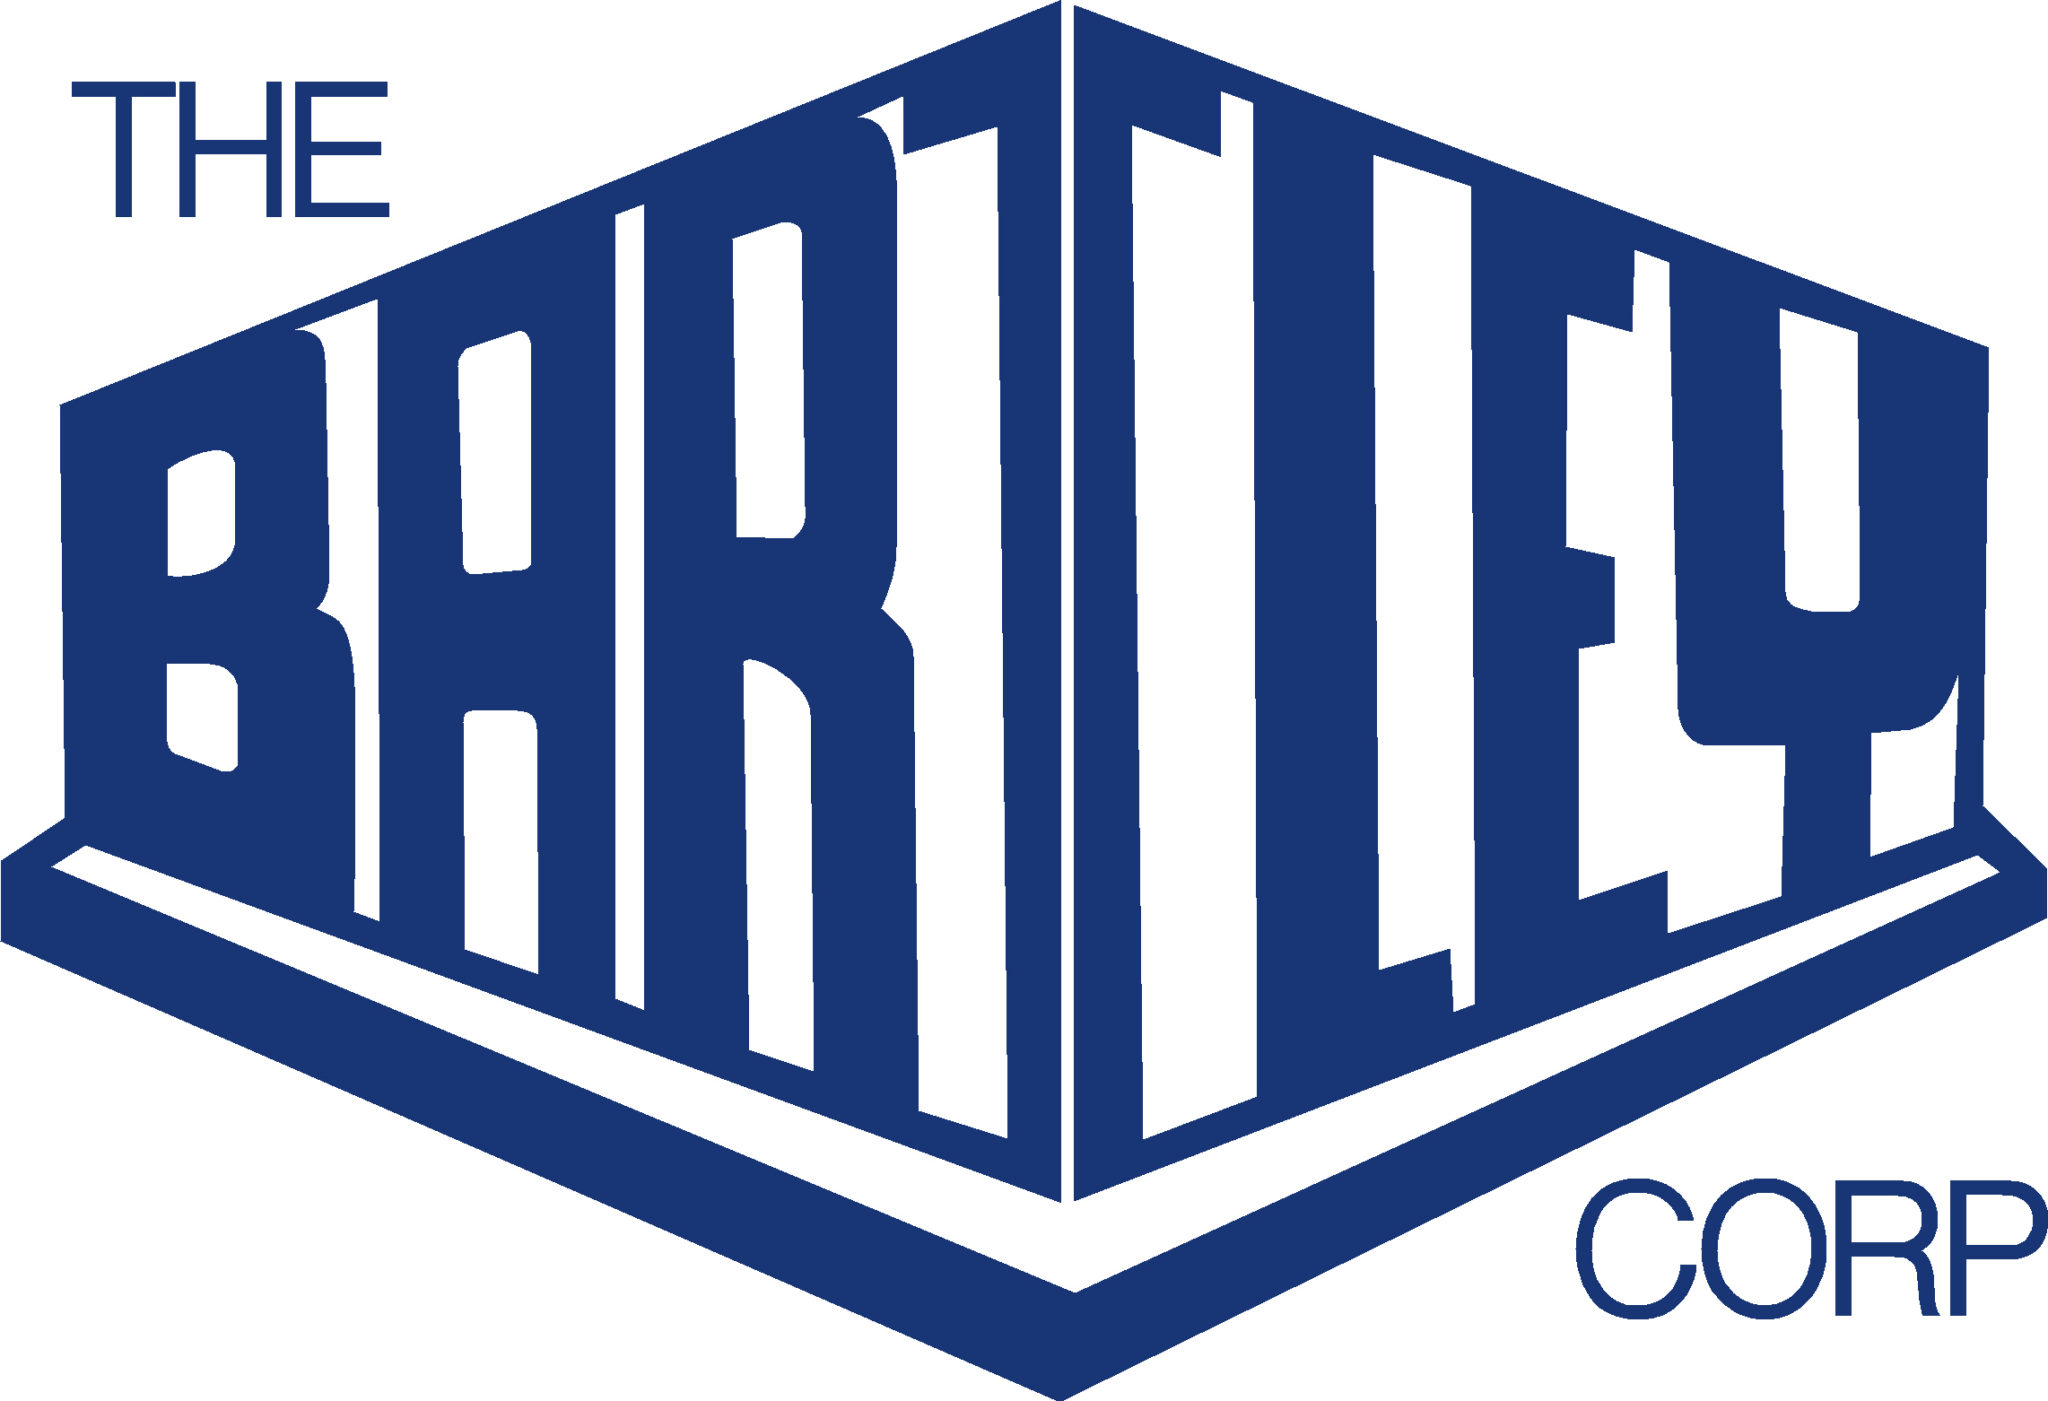 Bartley Corp